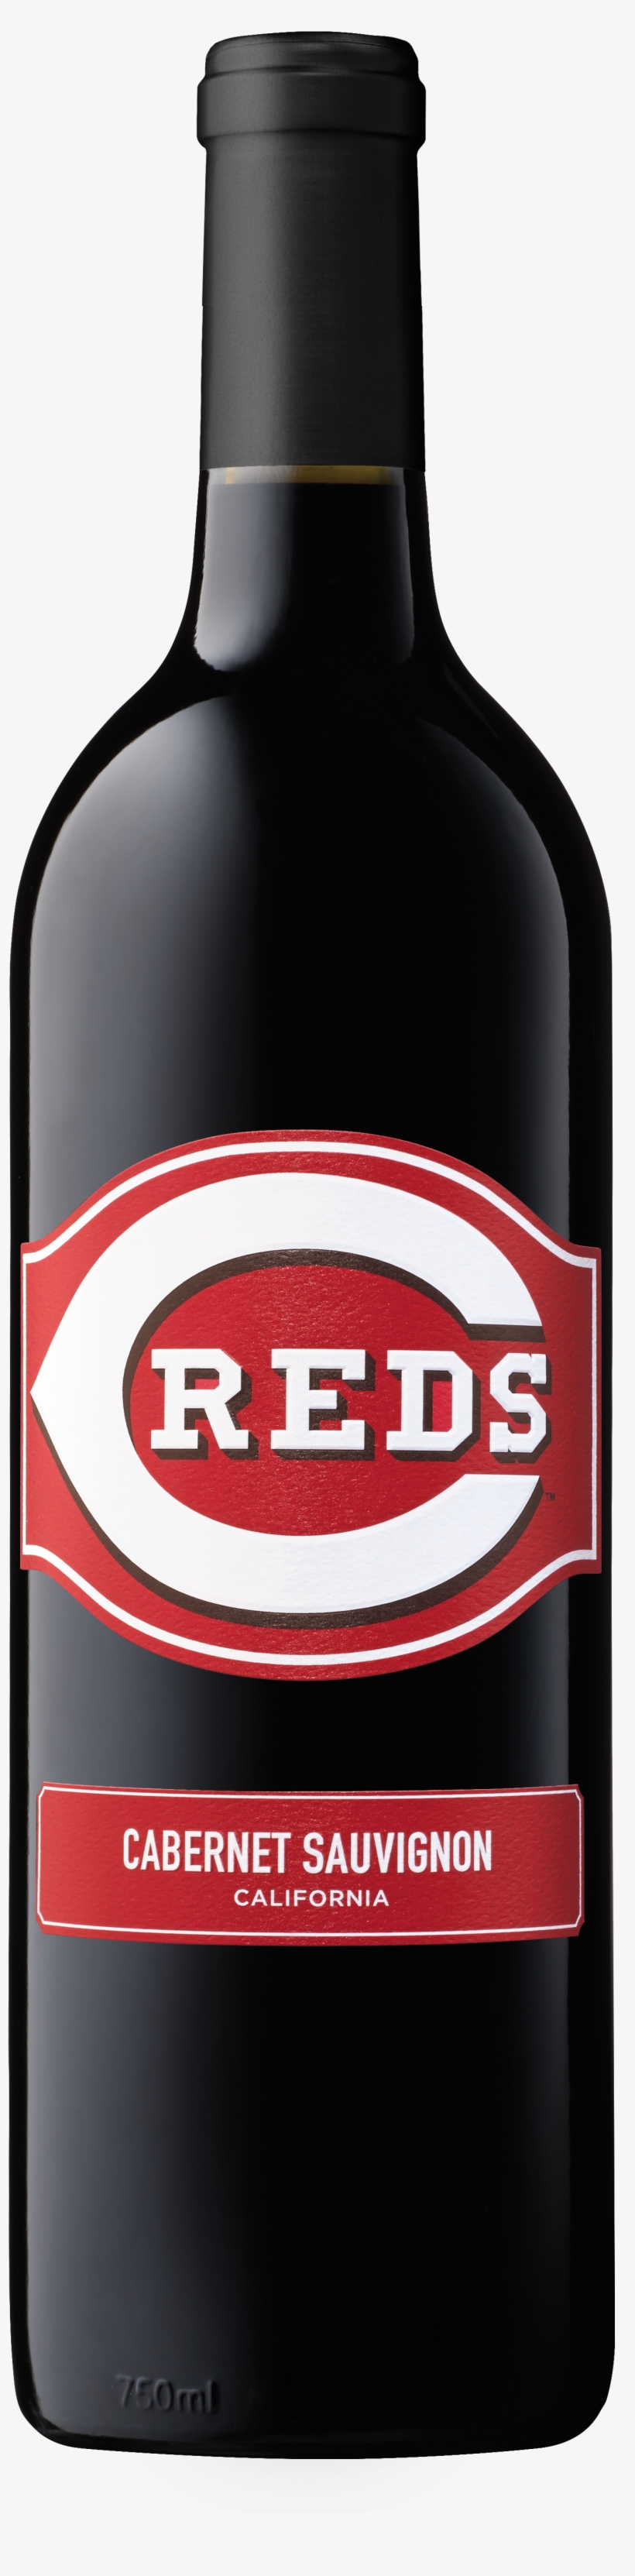 2014 Cabernet Sauvignon - Cincinnati Reds, transparent png #9533442